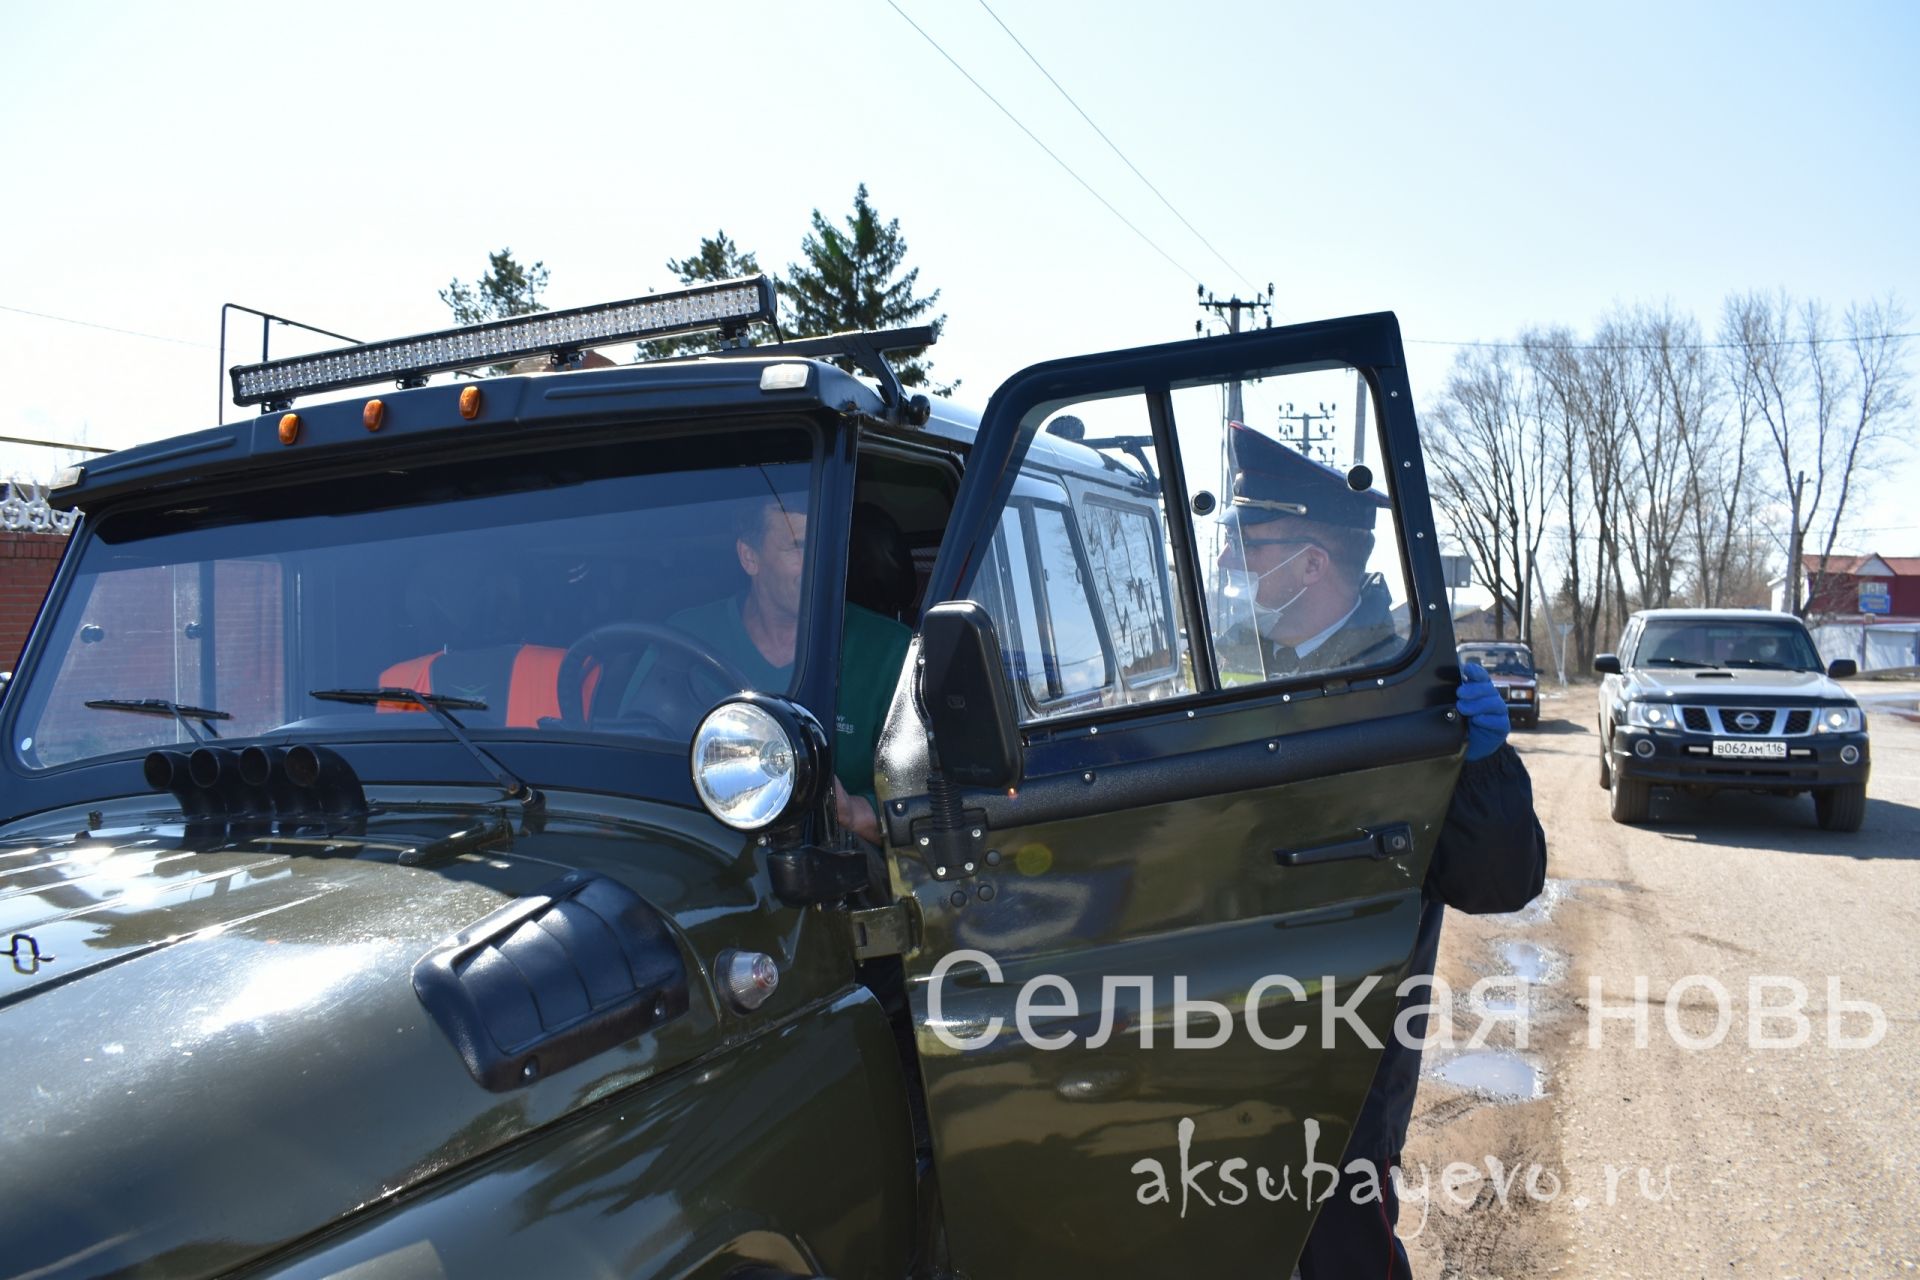 Полицейские патрули в Аксубаеве проверяют основания выхода из дома и посещение кладбищ